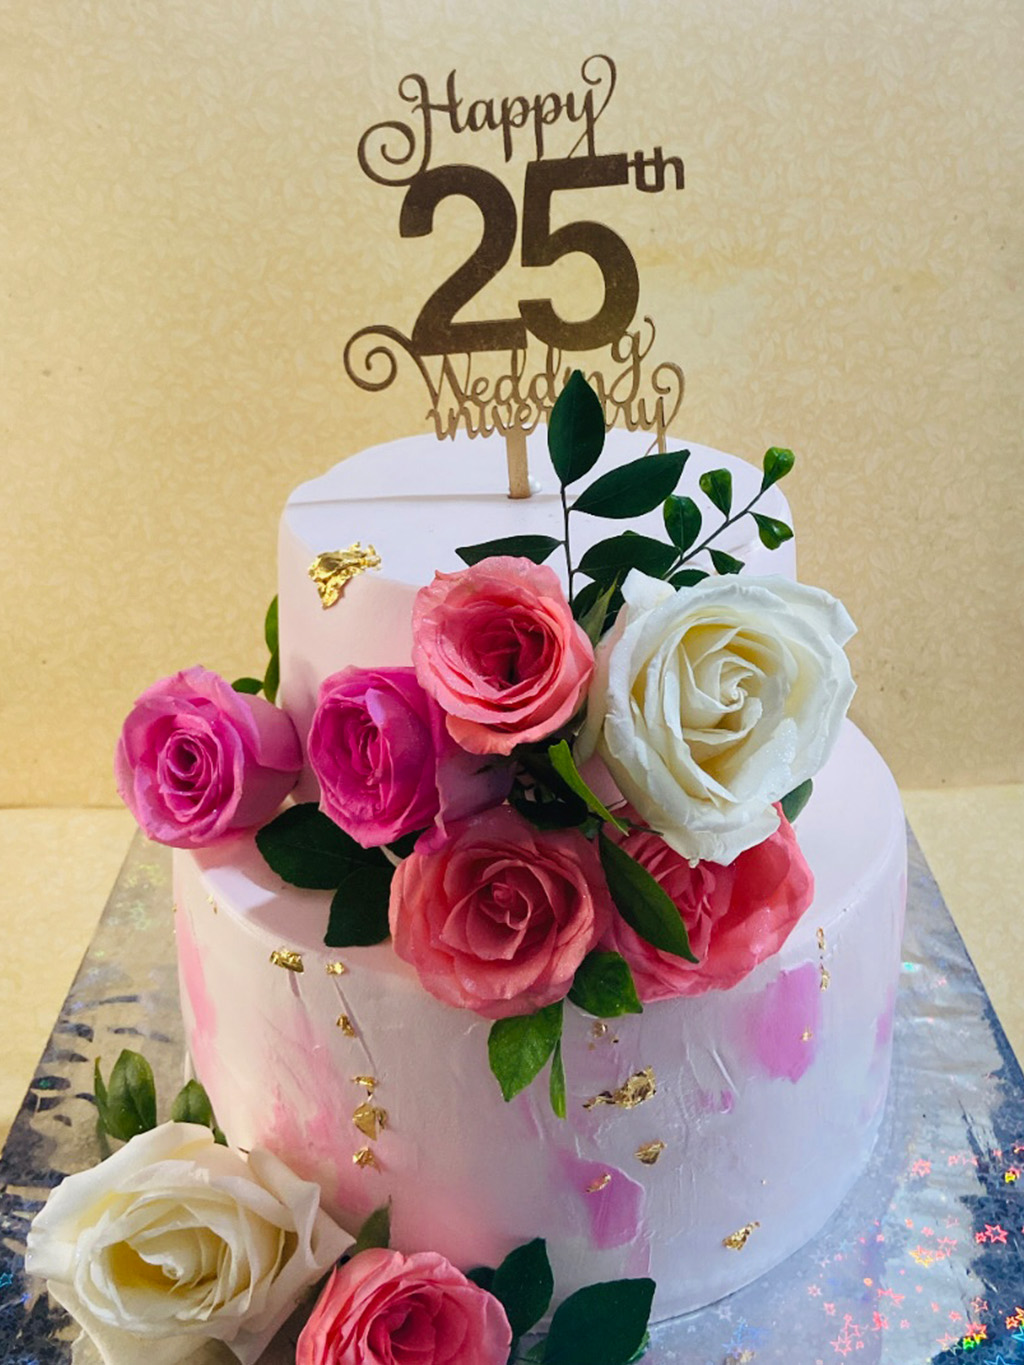 Wedding Anniversary Cake Decoration Ideas/Anniversary Cake Design - YouTube